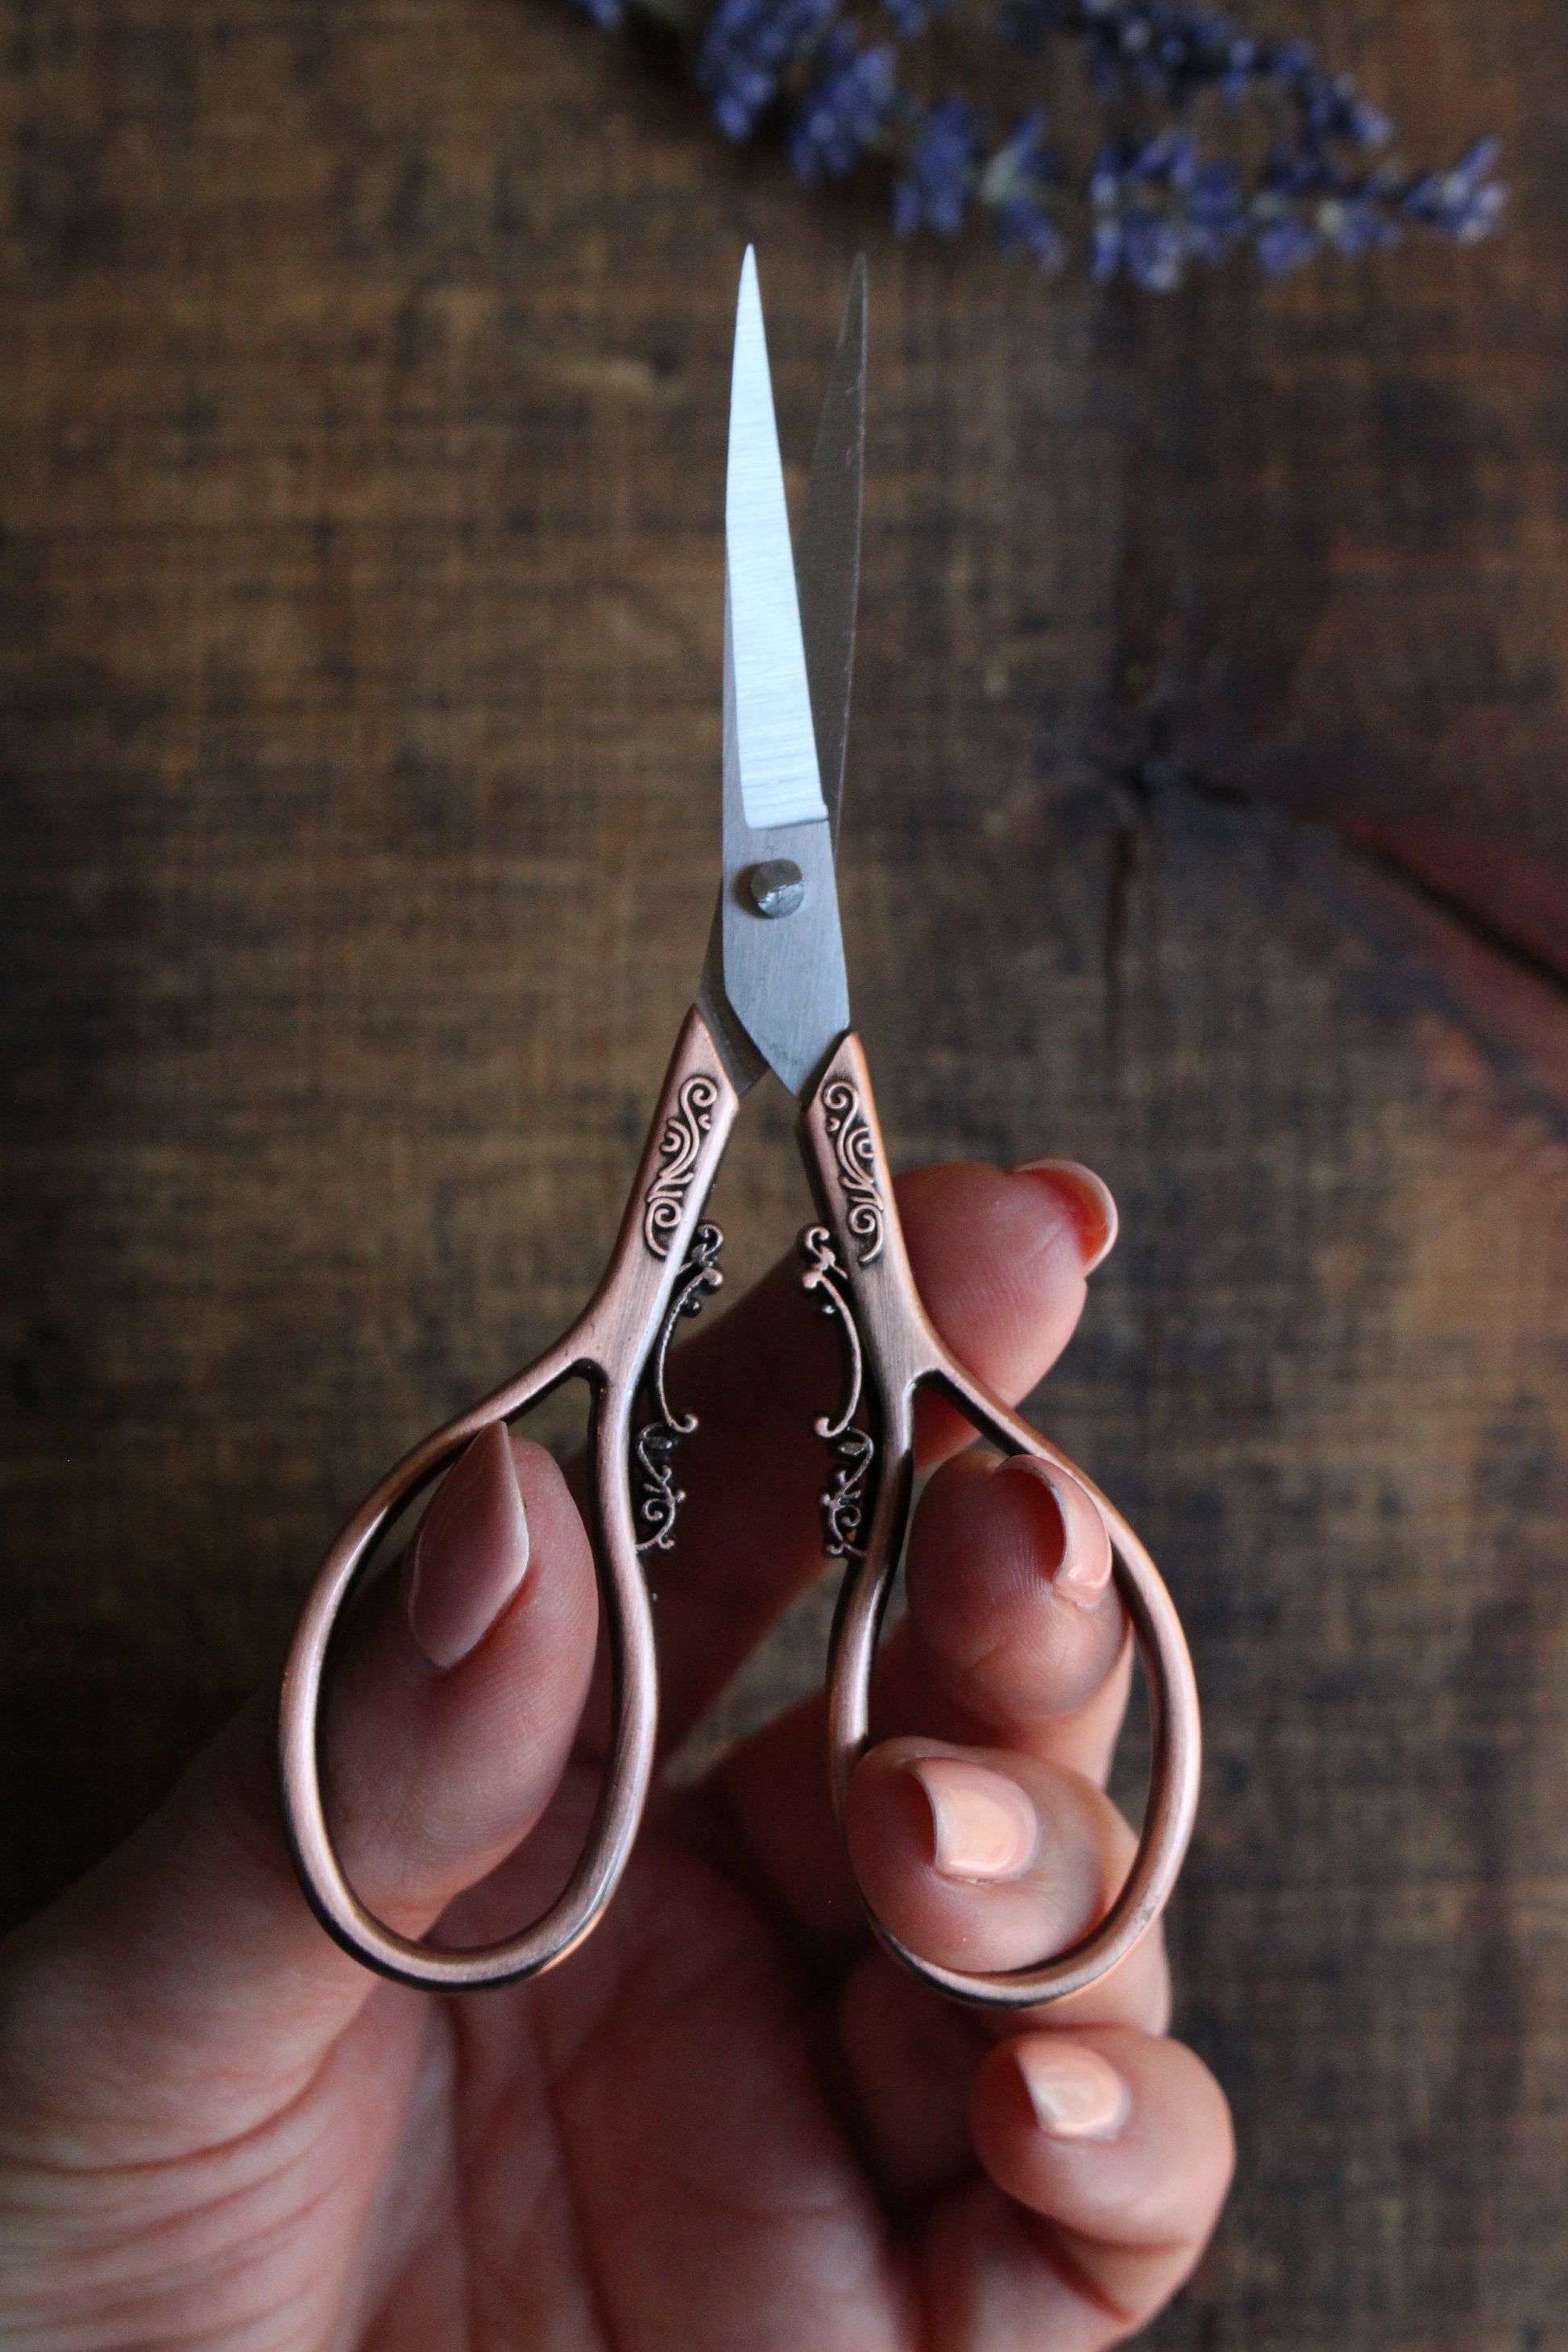 Floral Teardrop embroidery scissors in antique copper